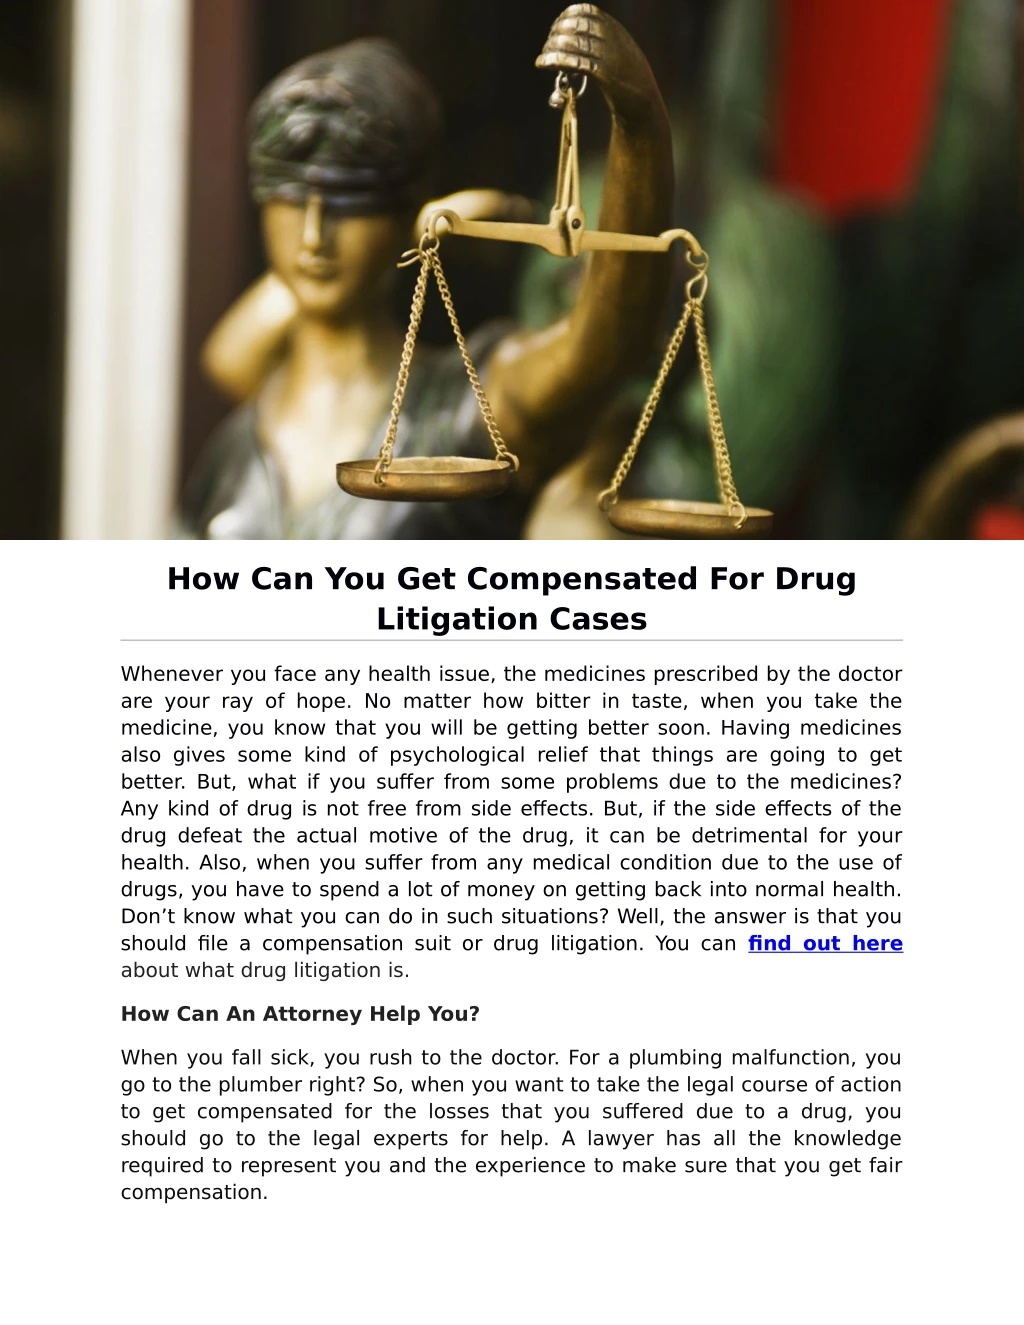 how can you get compensated for drug litigation